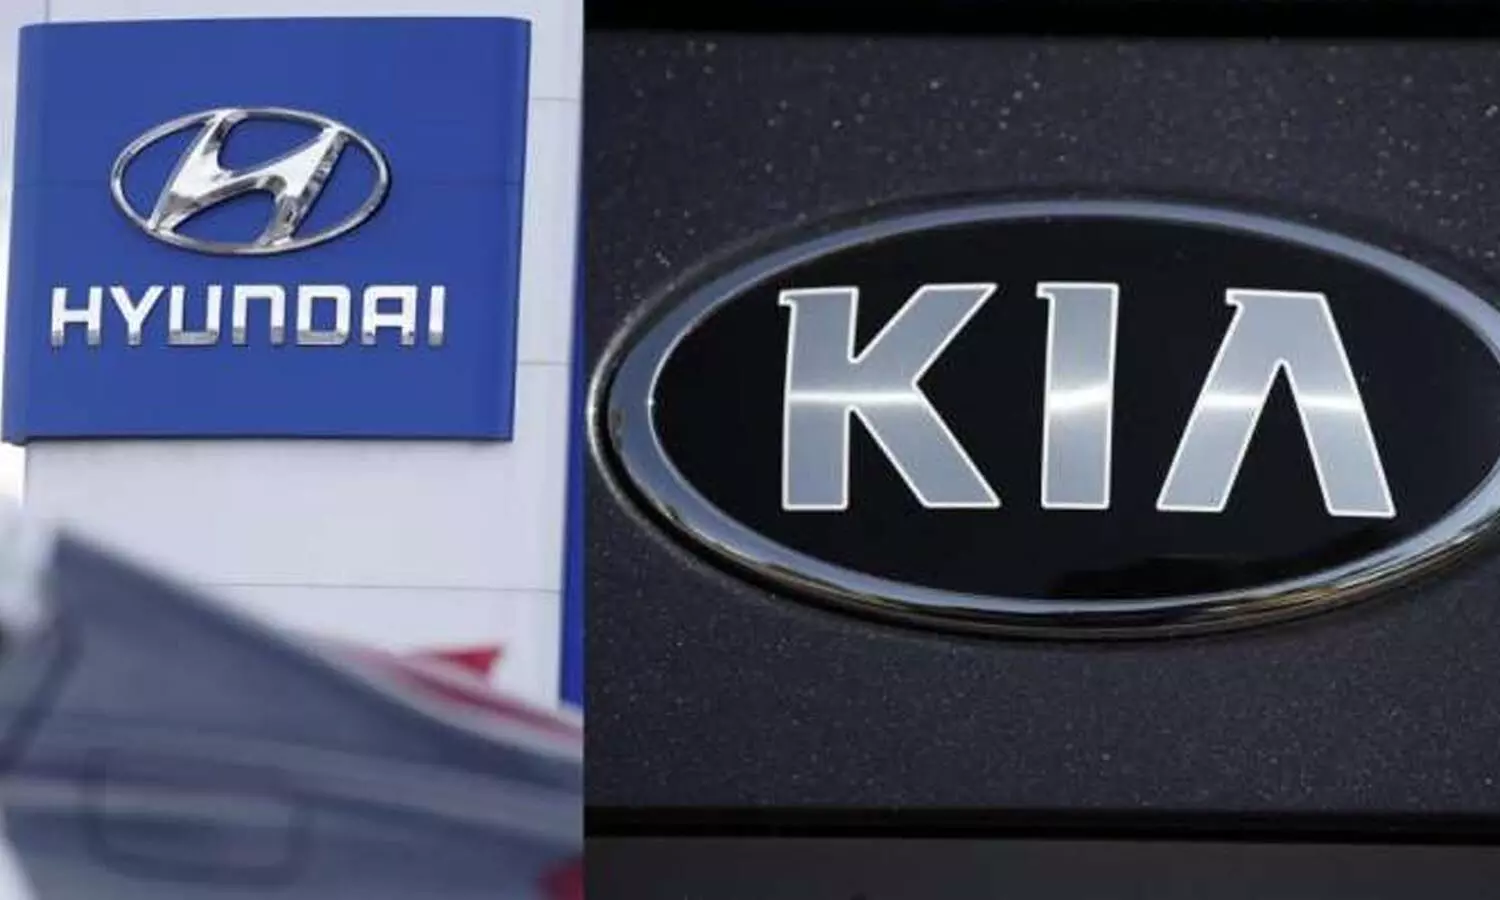 Hyundai-Kia | హ్యుండాయ్ - కియా కార్ల‌ లాక్ బ్రేక్ మాడ్యూల్‌లో లోపం.. అమెరికాలో 34 ల‌క్ష‌ల కార్ల రీకాల్‌..!